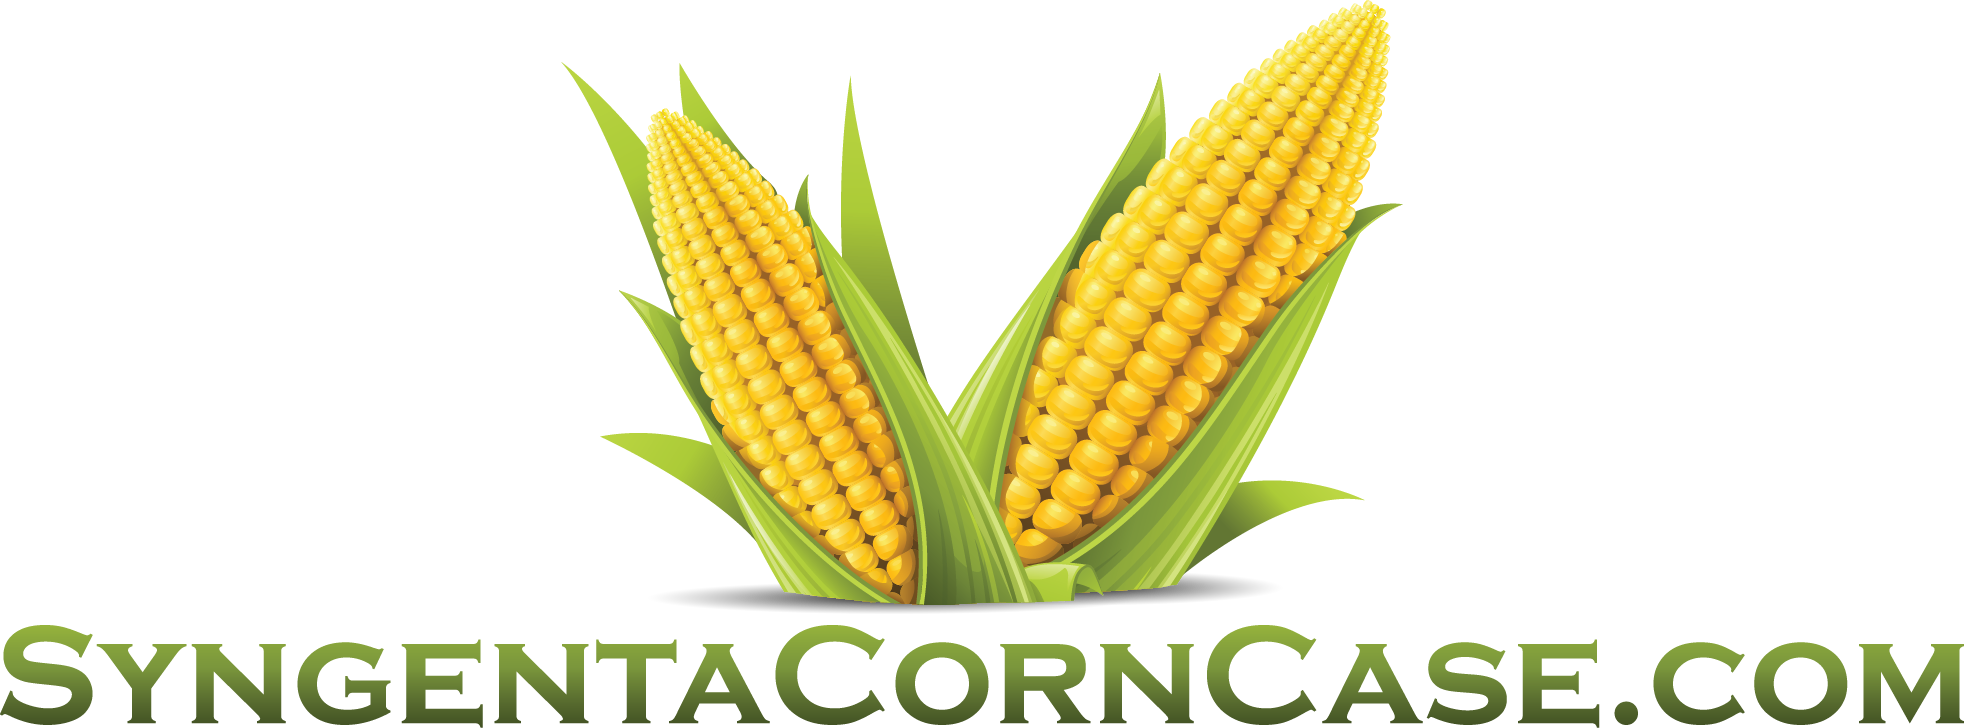 syngenta corn case